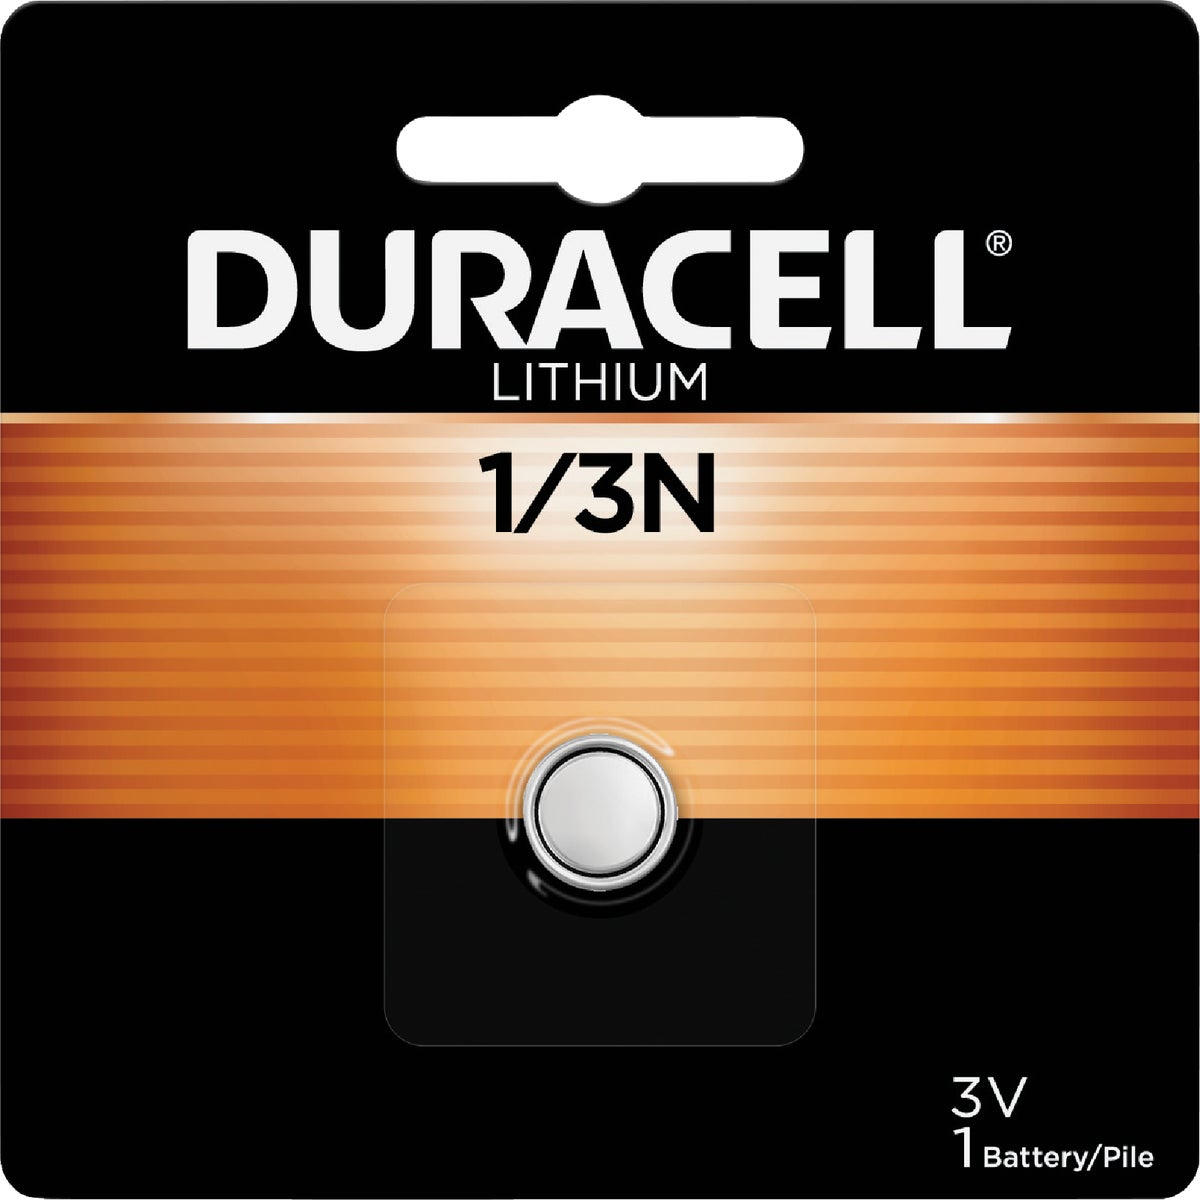 Duracell 1/3N Lithium Battery